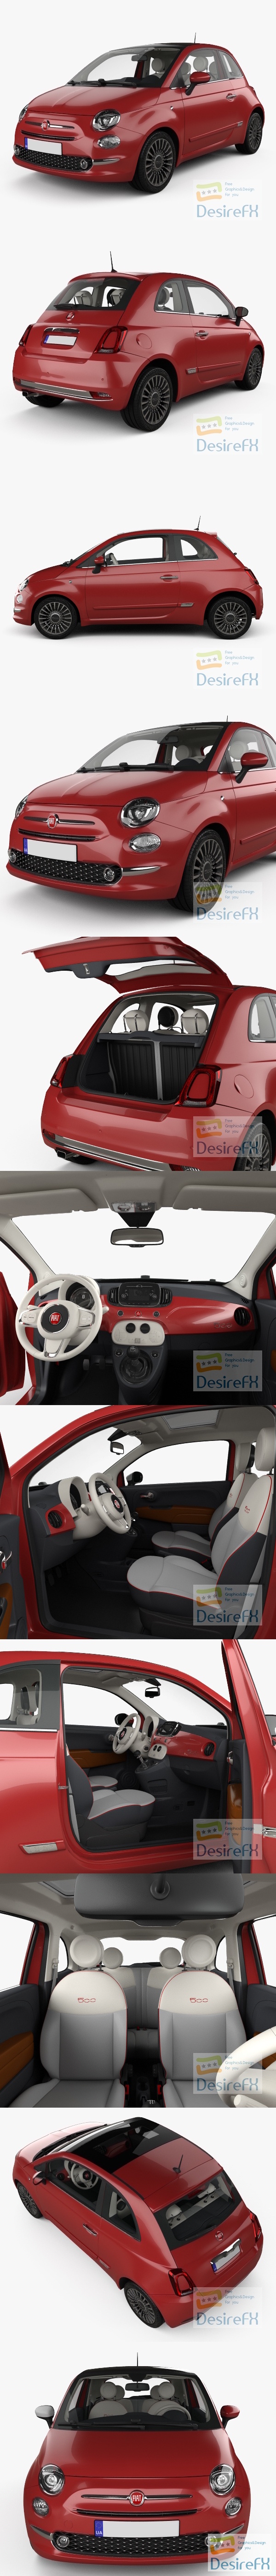 Fiat 500 with HQ interior 2015 3D Model